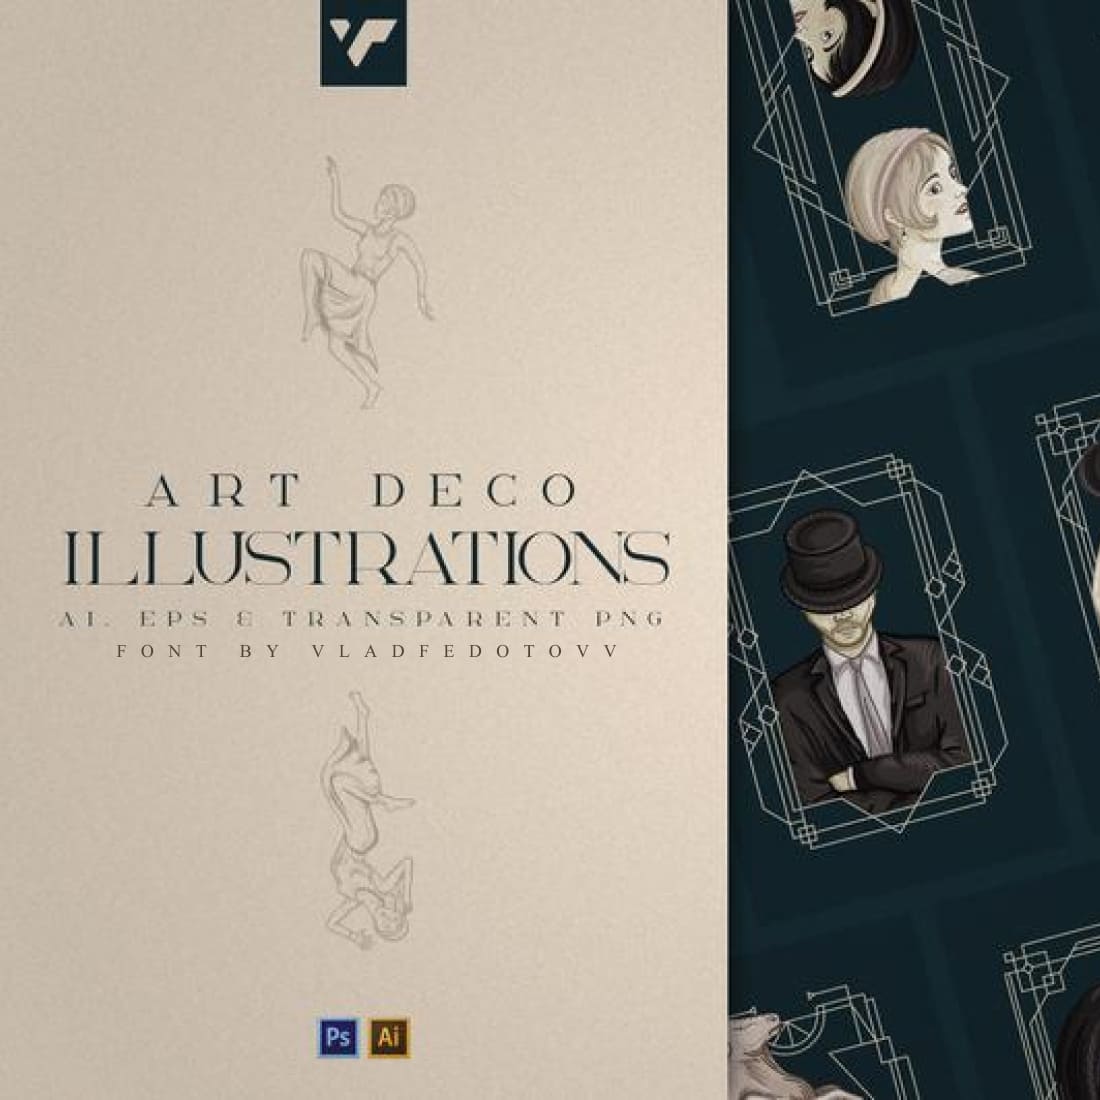 Art Deco illustrations – Ai EPS PSD cover image.